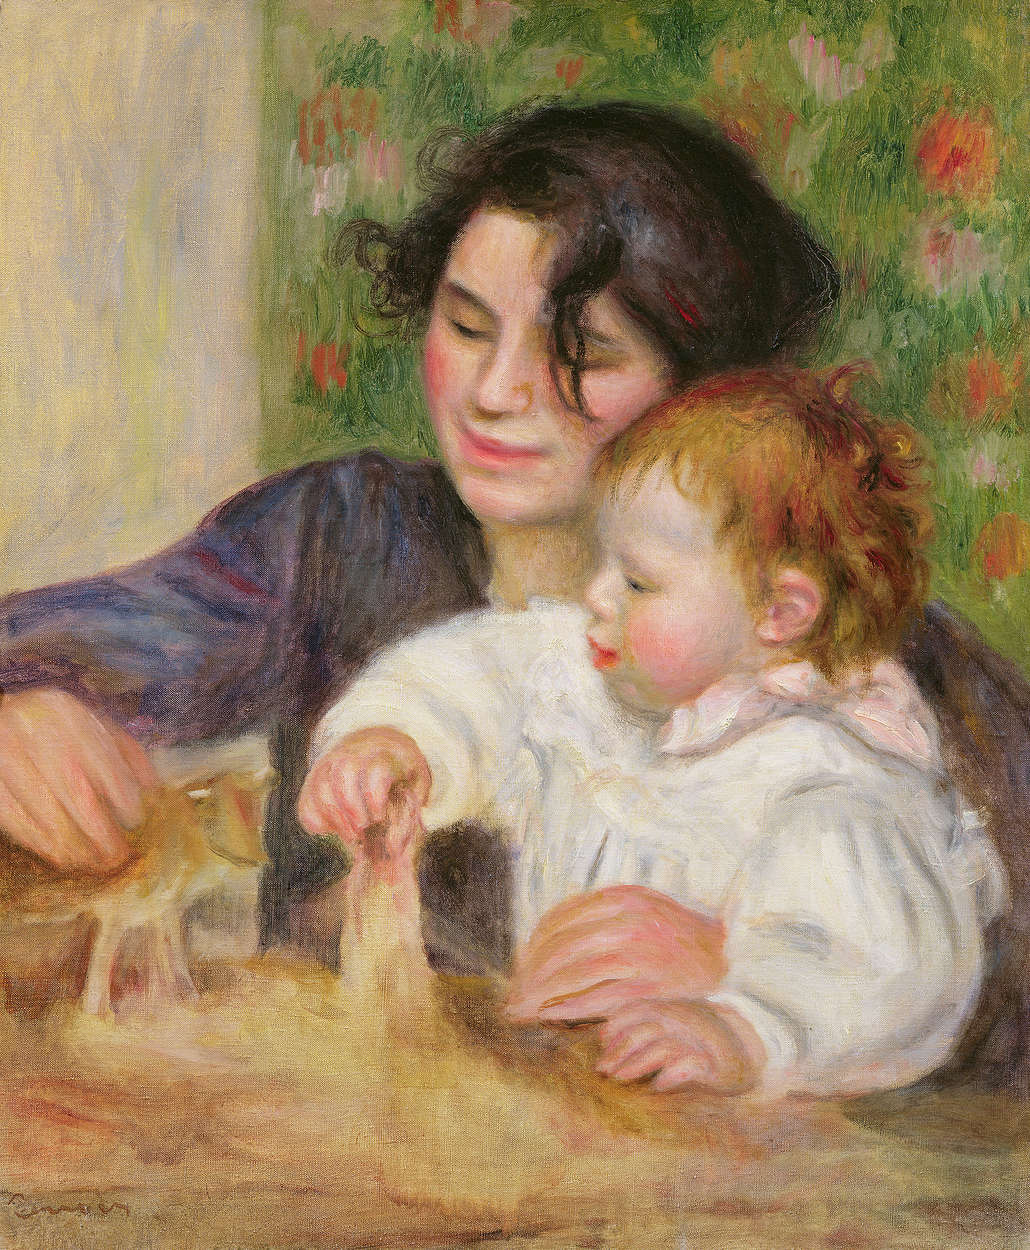             Fotomurali "Gabrielle e Jean" di Pierre Auguste Renoir
        